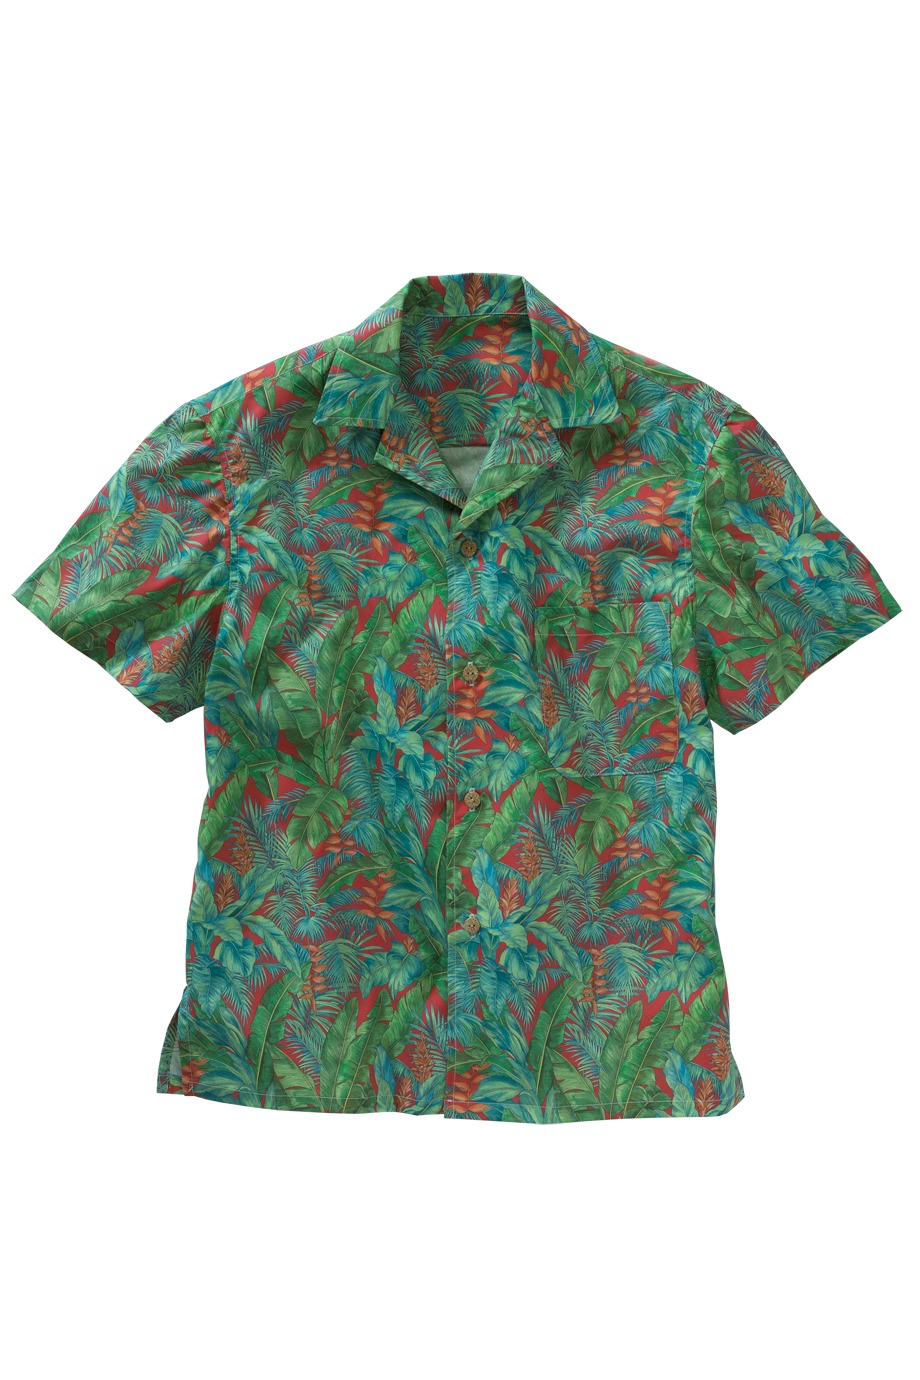 Edwards Garment 1032 - Tropical Leaf Camp Shirt